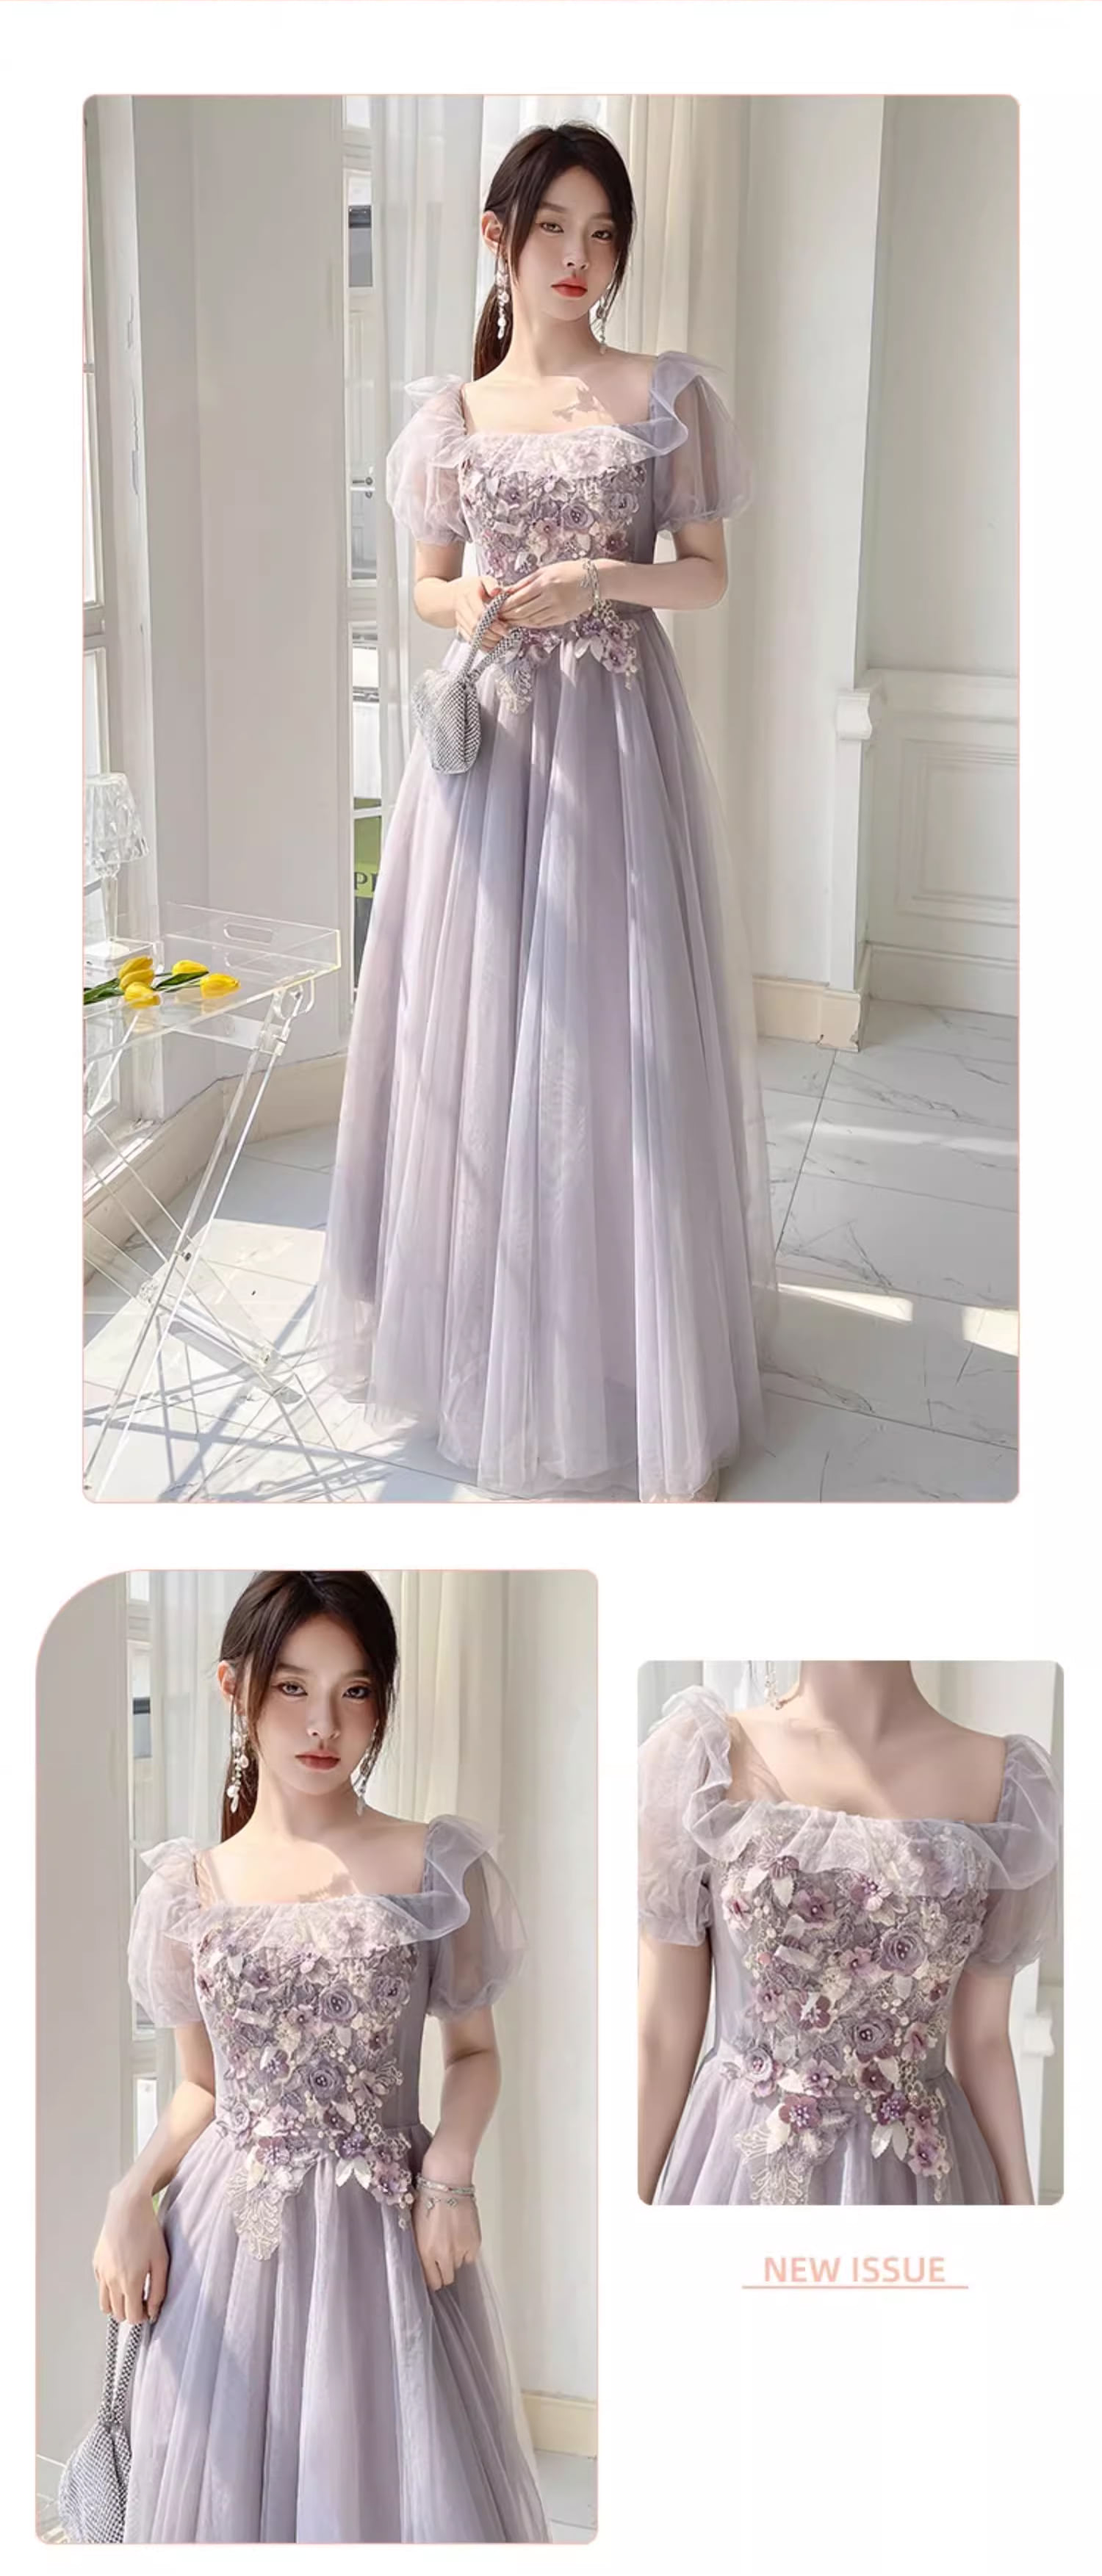 Fairy-Grayish-Purple-Floral-Embroidery-Wedding-Guest-Bridesmaid-Dress14